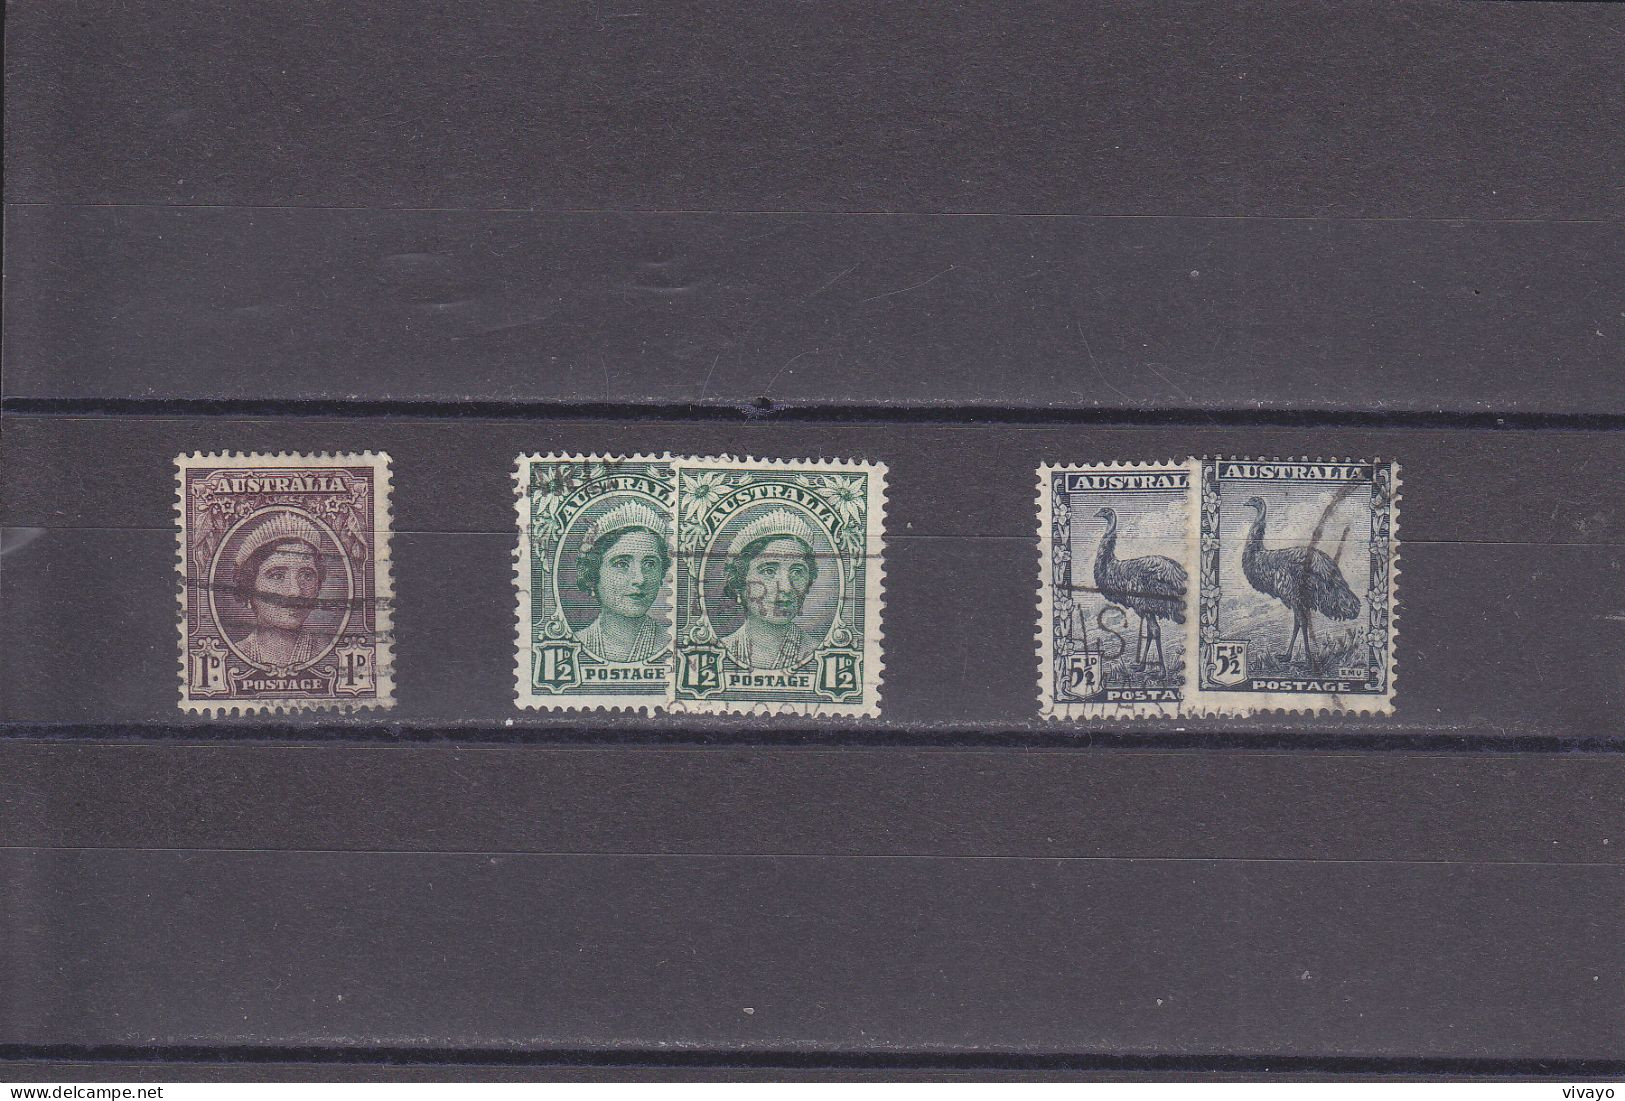 AUSTRALIA - O / FINE CANCELLED - 1942 / 1943 - QUEEN ELIZABETH, EMU - Yv. 135, 143, 144 - Mi. 163, 164, 168 - Used Stamps